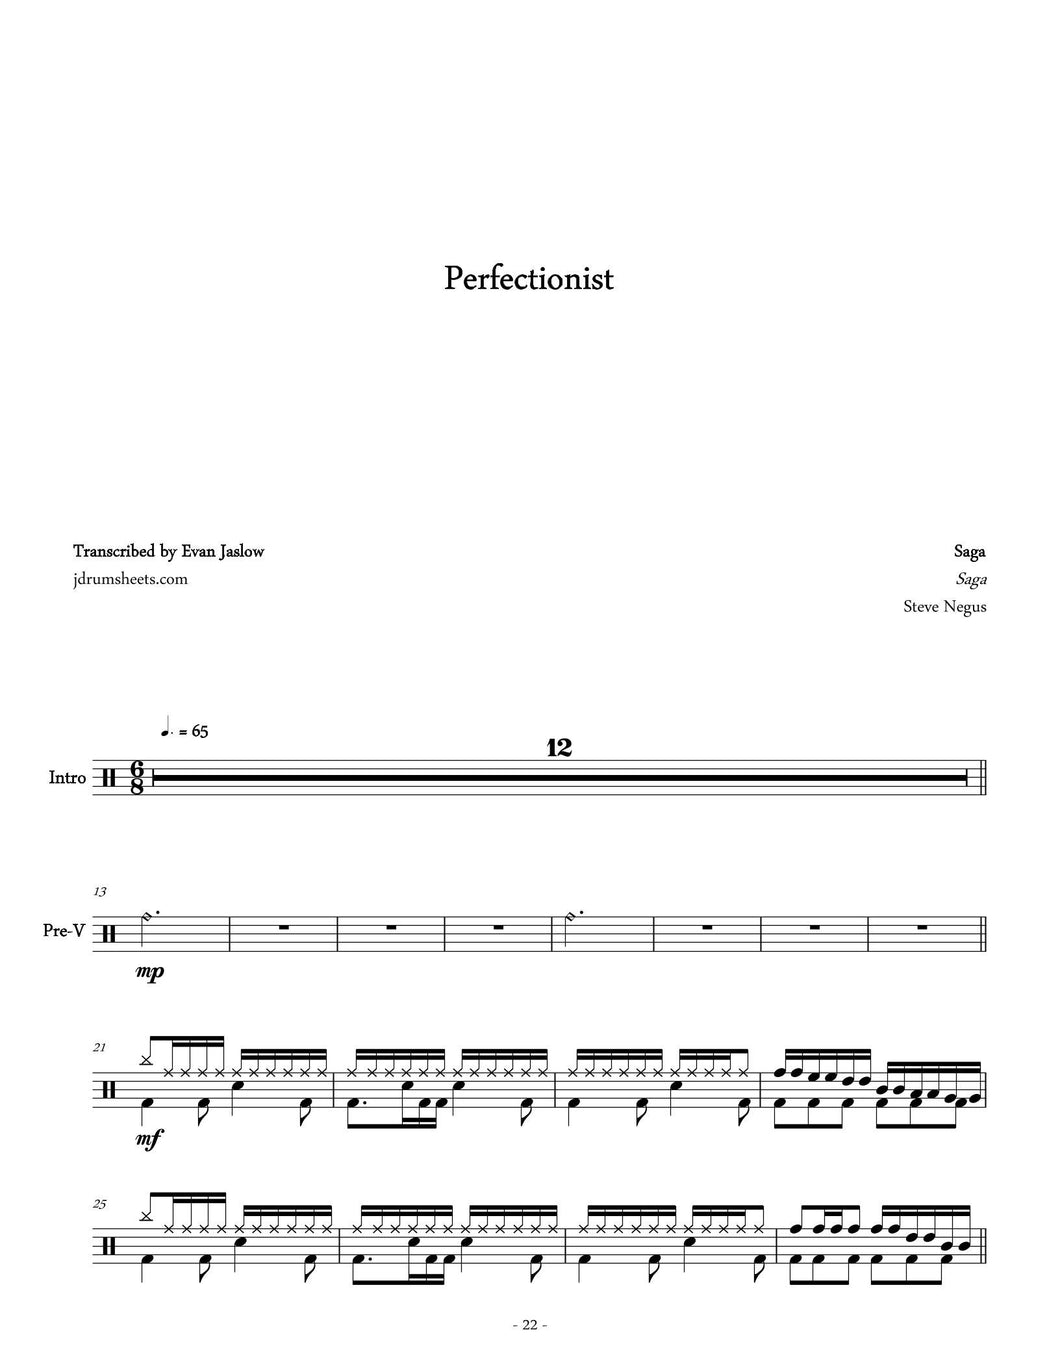 Perfectionist - Saga - Full Drum Transcription / Drum Sheet Music - Jaslow Drum Sheets